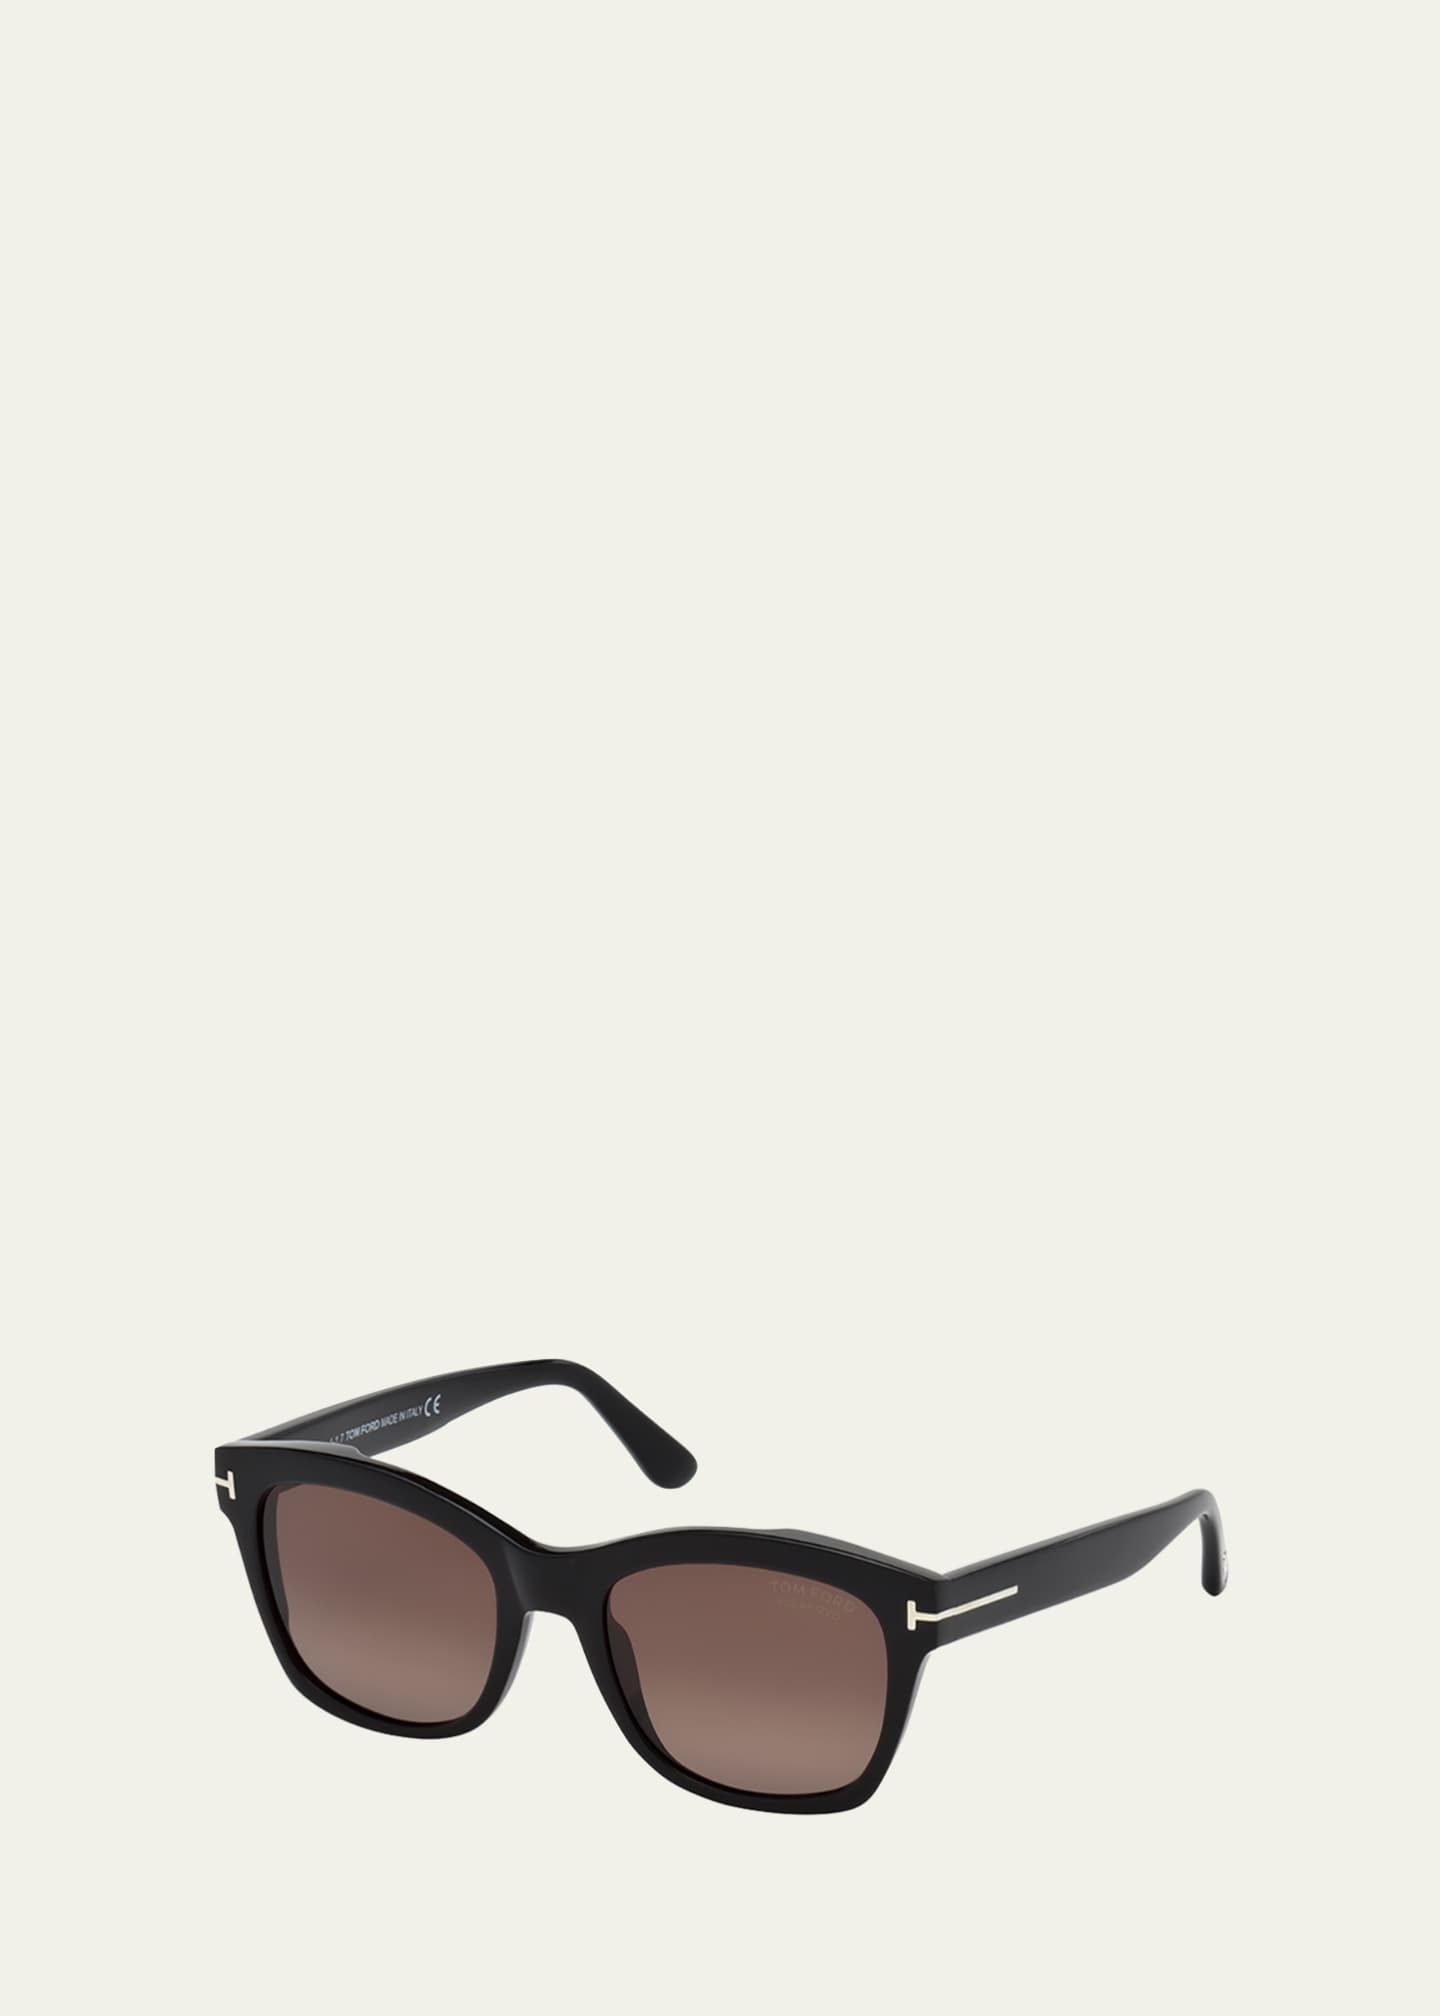 TOM FORD Lauren 02 Mirrored Square Sunglasses - Bergdorf Goodman